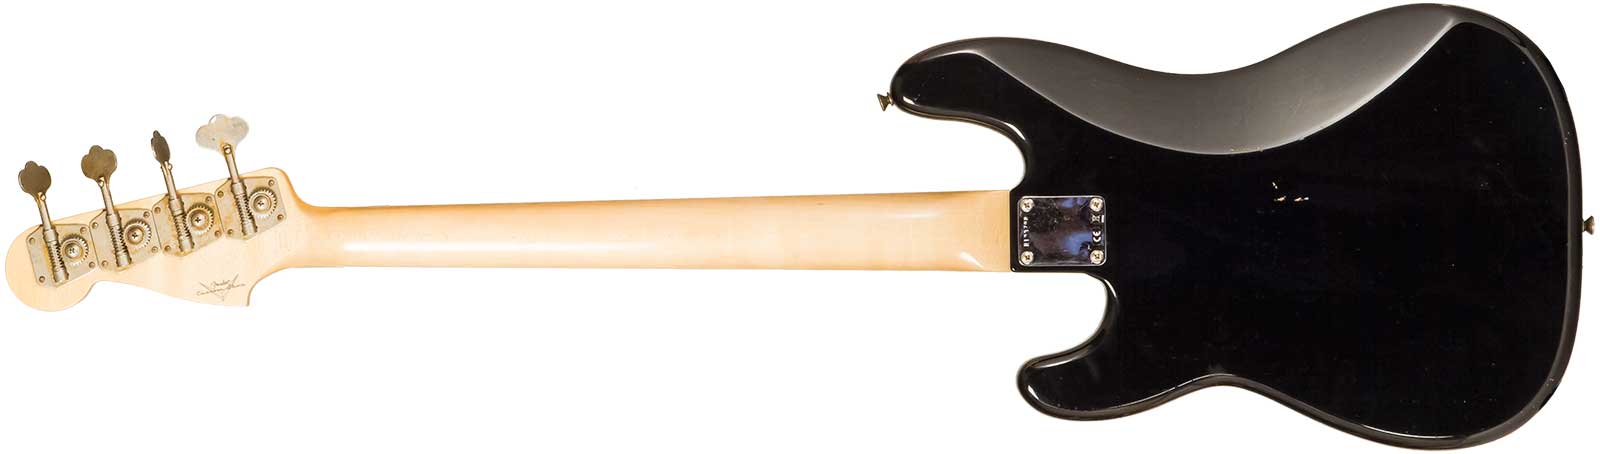 Fender Custom Shop Precision Bass 1962 Rw #r133798 - Journey Man Relic Black - Solid body elektrische bas - Variation 1